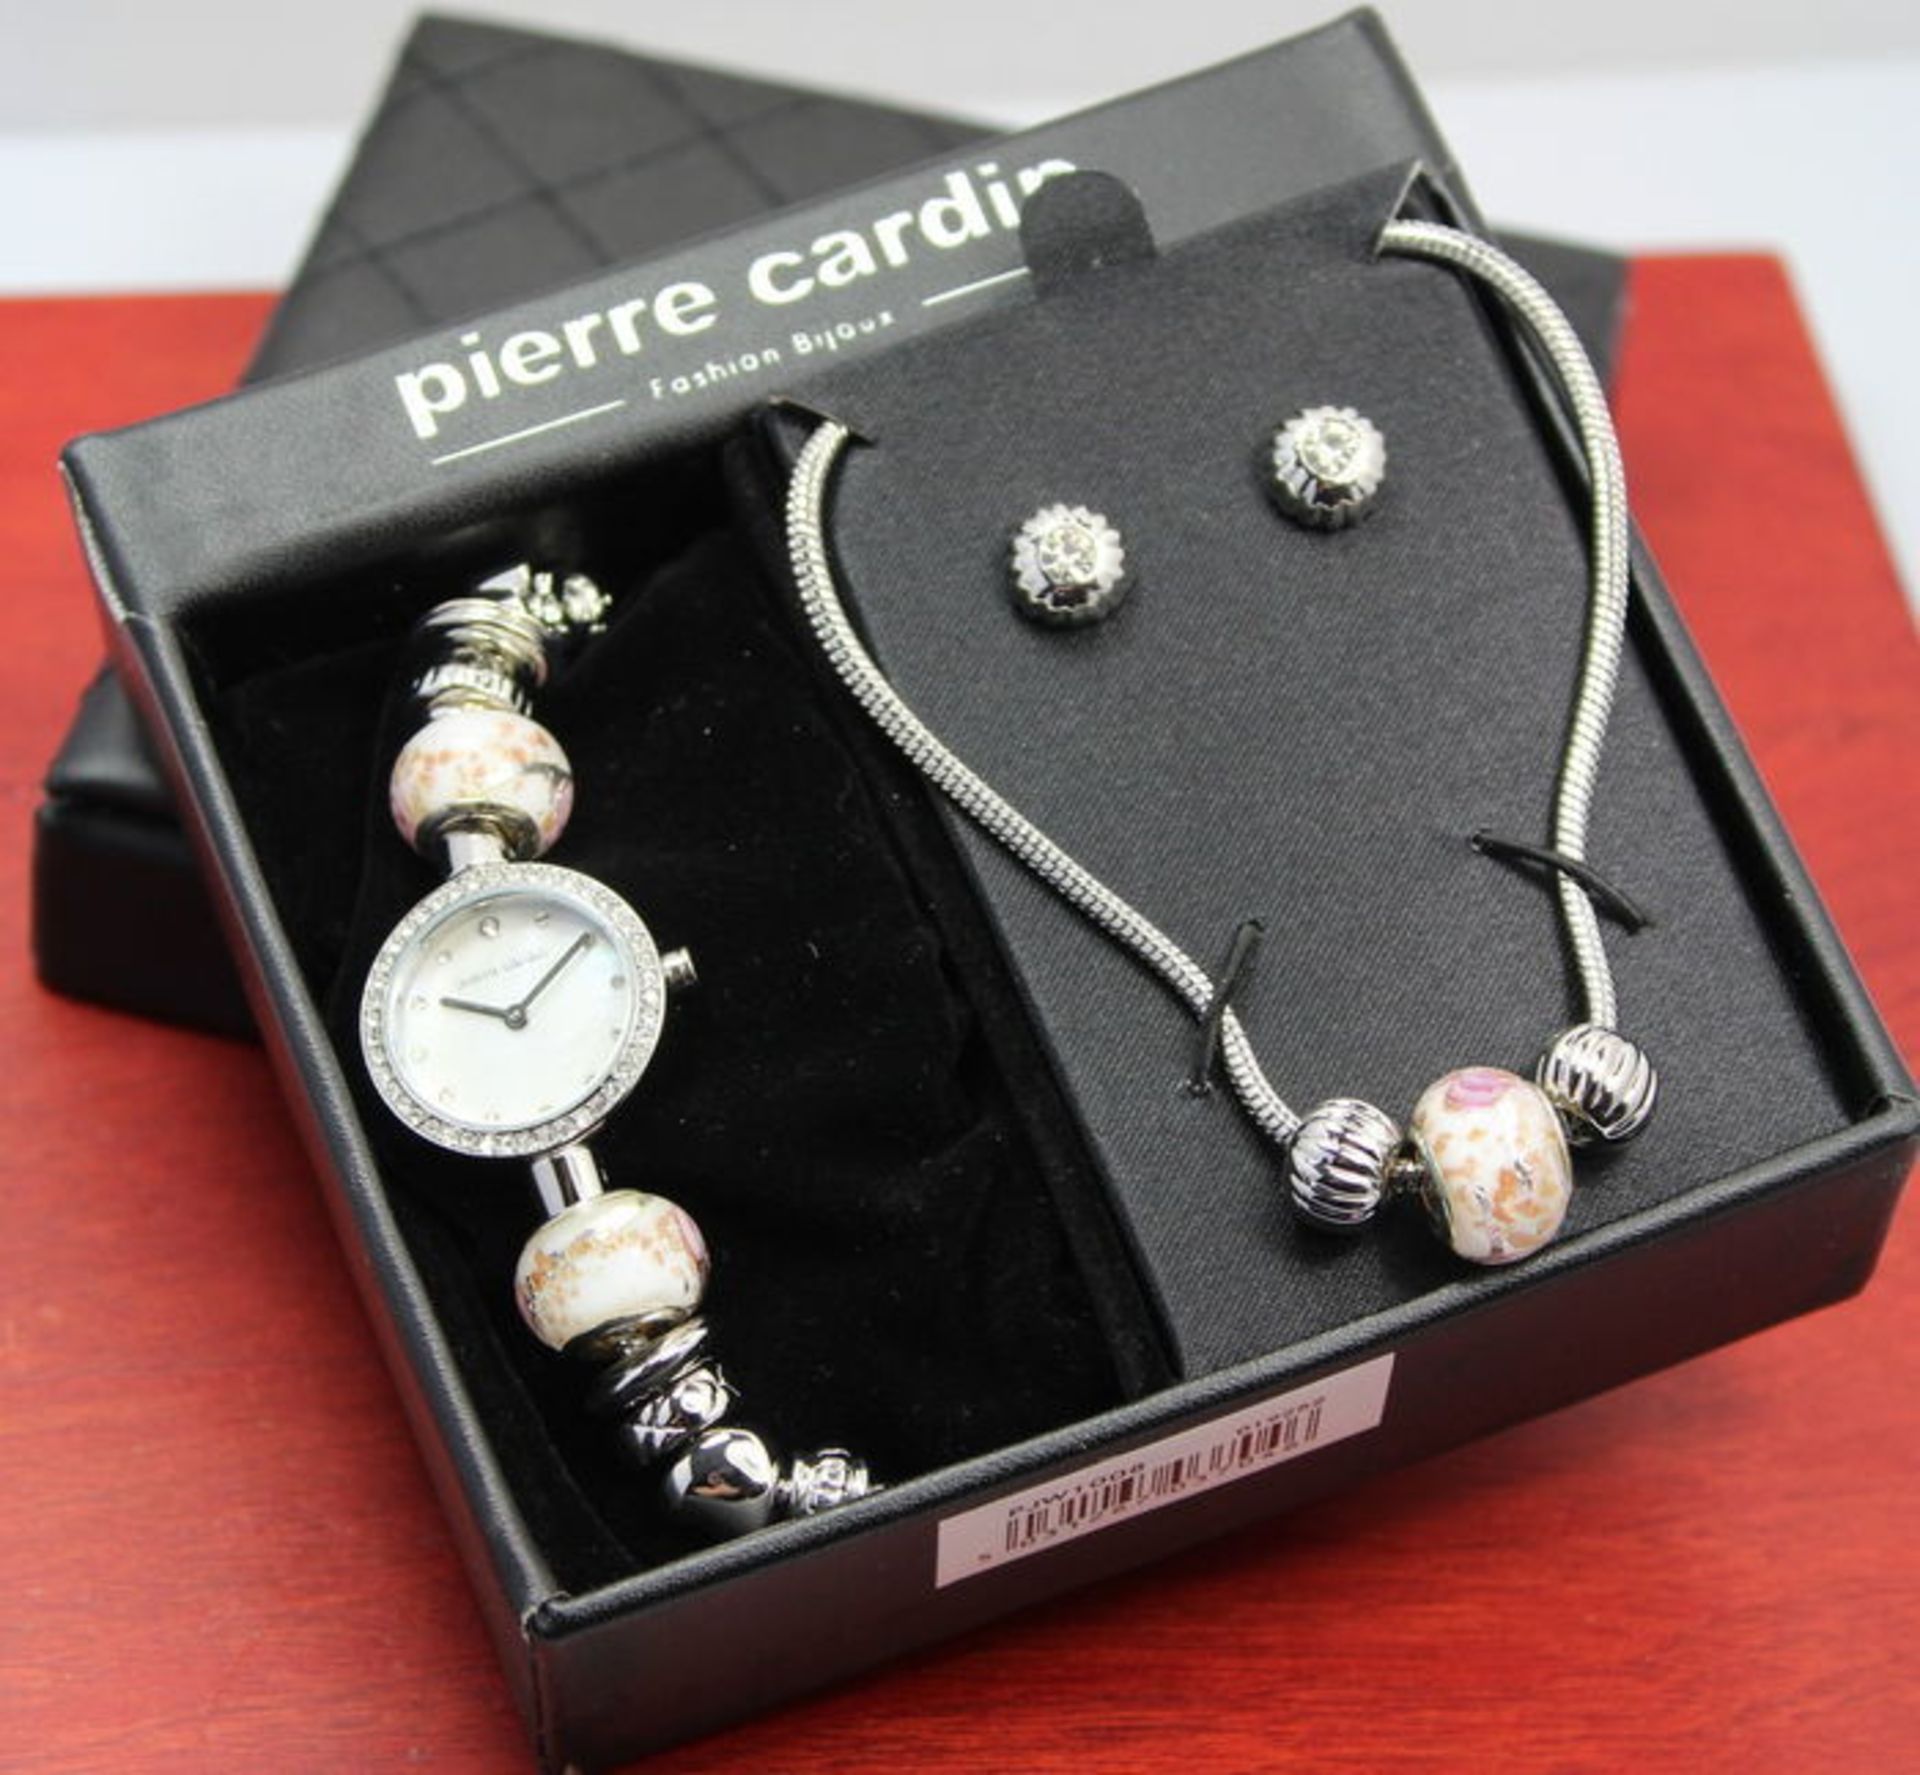 Pierre Cardin Ladies Designer Watch, Necklace, Earrings Set - Stainless Steel Case - Stainless Steel